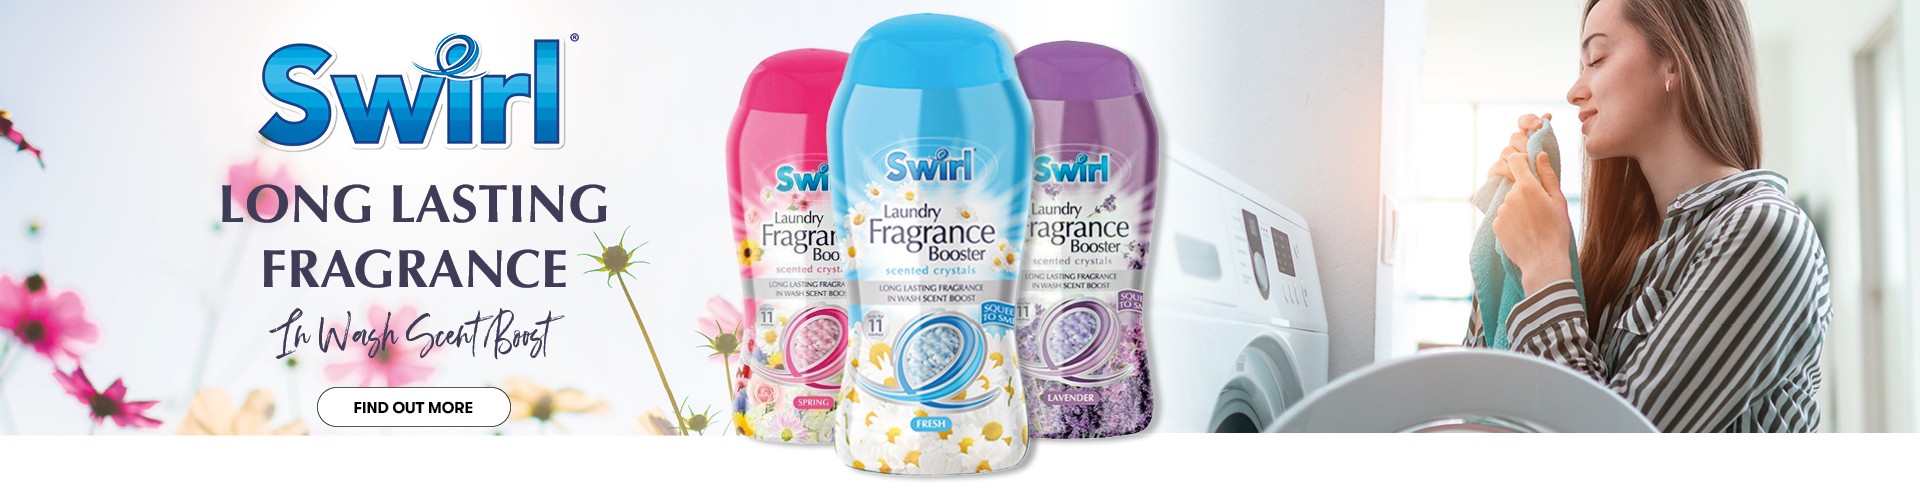 Swirl Fragrance 